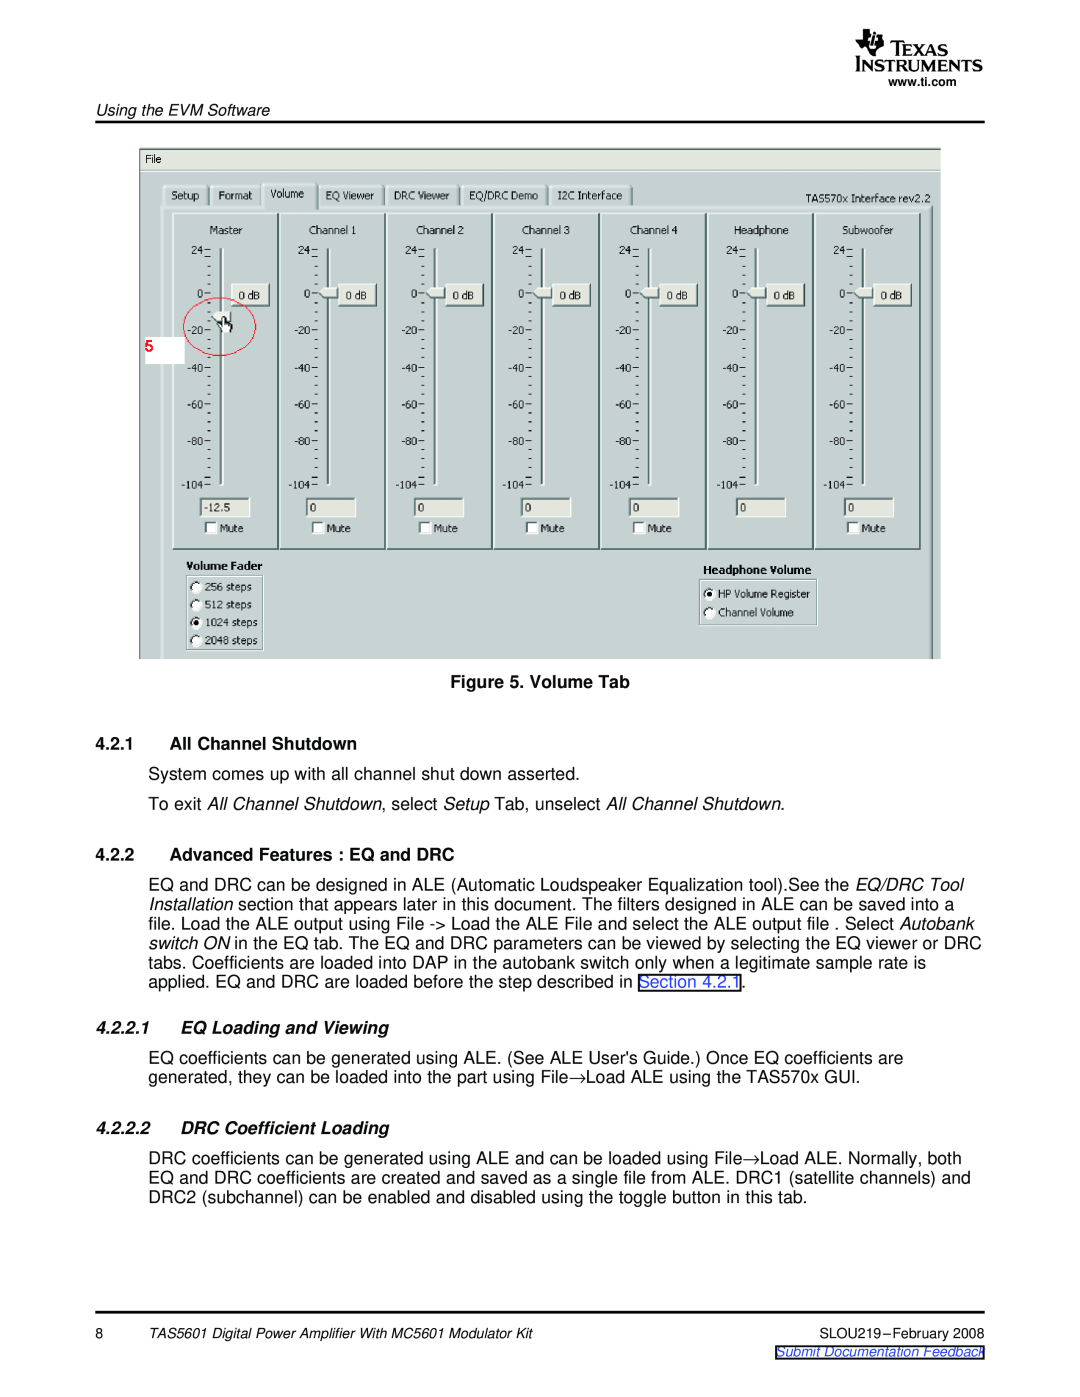 Texas Instruments TAS5601 manual Volume Tab 4.2.1All Channel Shutdown, 4.2.2Advanced Features EQ and DRC 